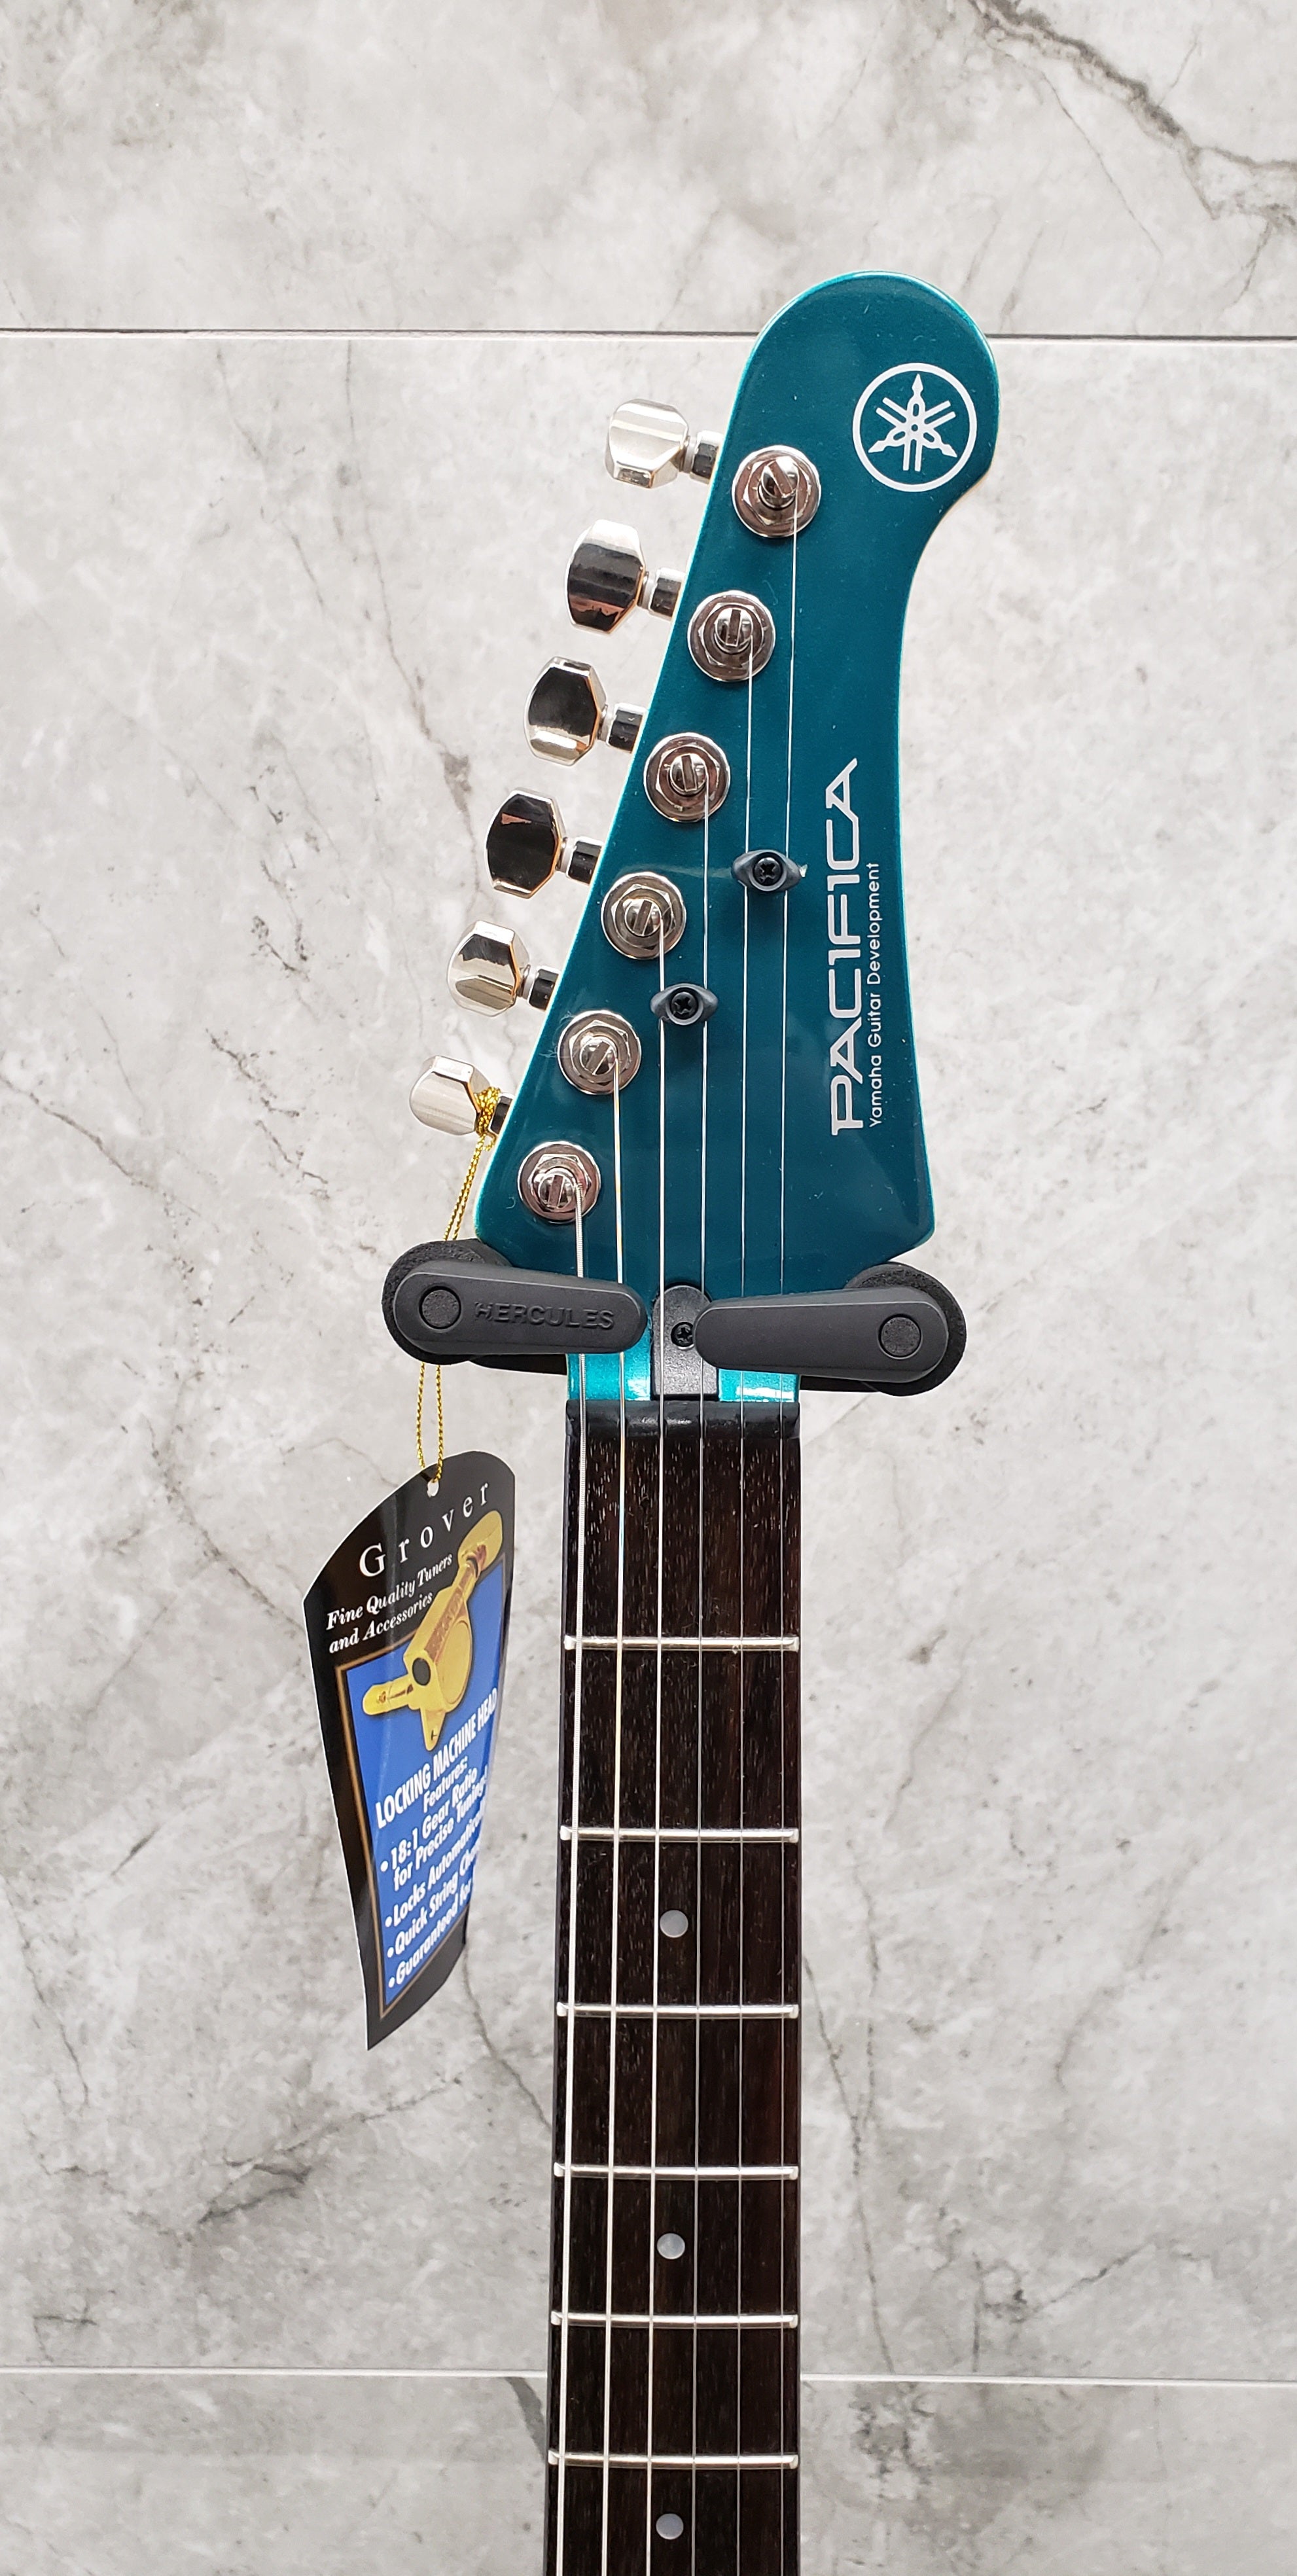 Yamaha PAC612VIIX TGM Pacifica 6-String RH Electric Guitar Teal Green Metallic